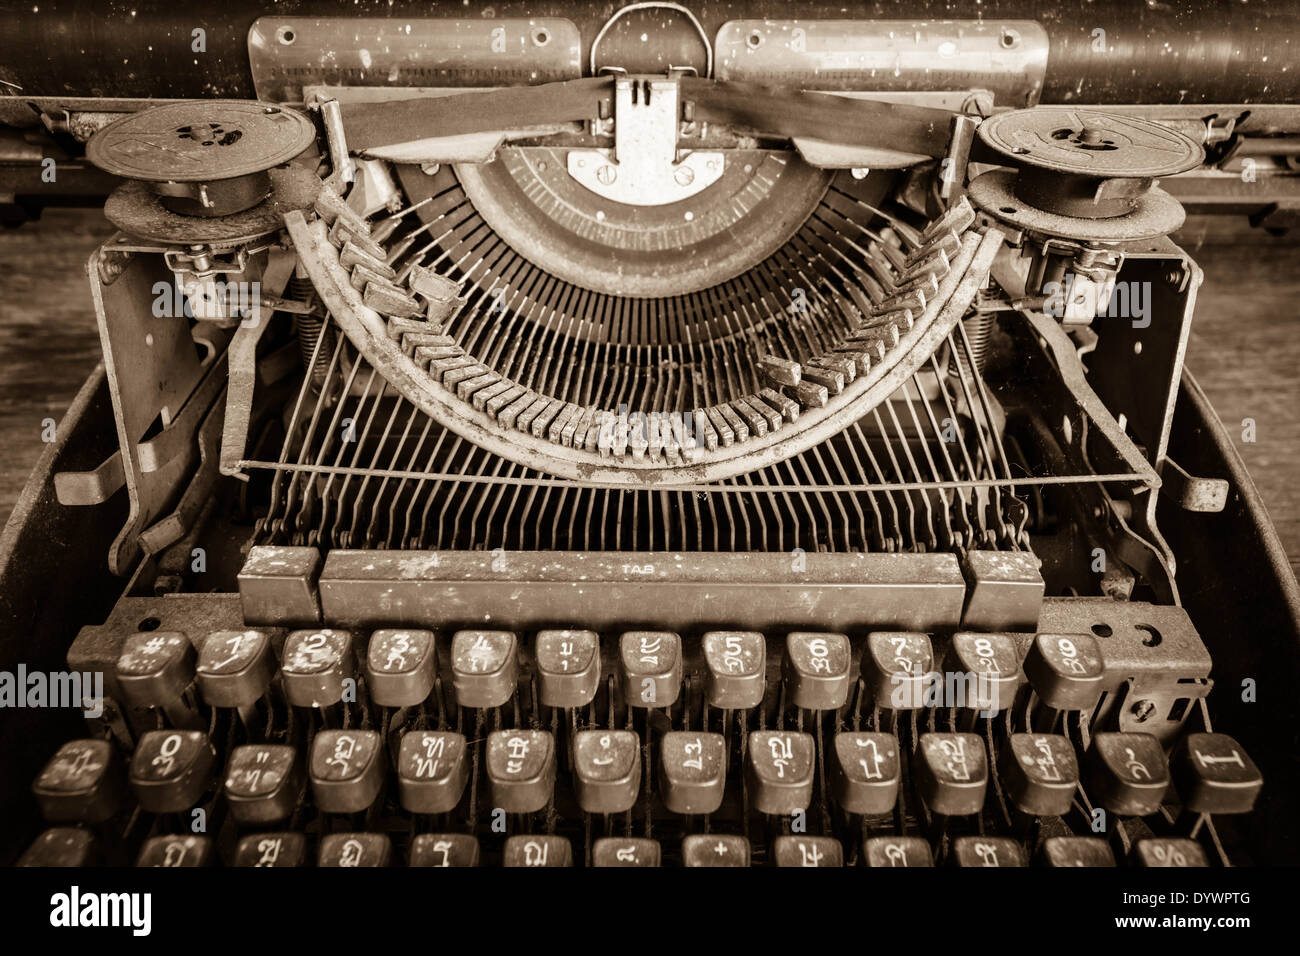  AALGO Vintage Typewriter Machine Traditional Manual